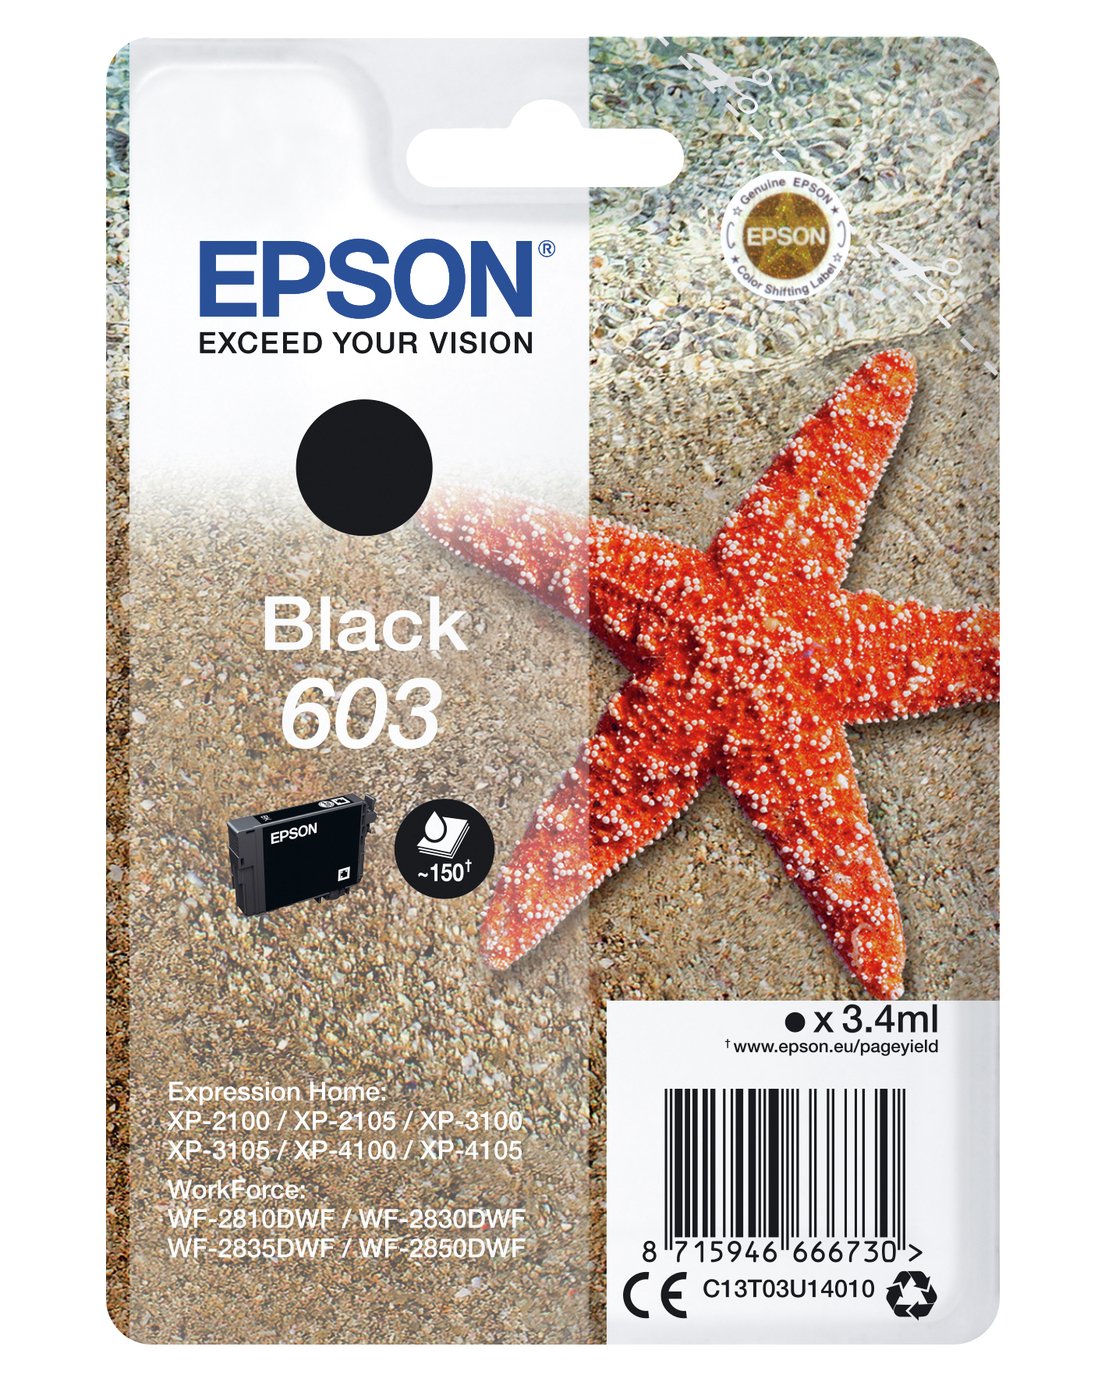 Epson 603 Starfish Ink Cartridge Review